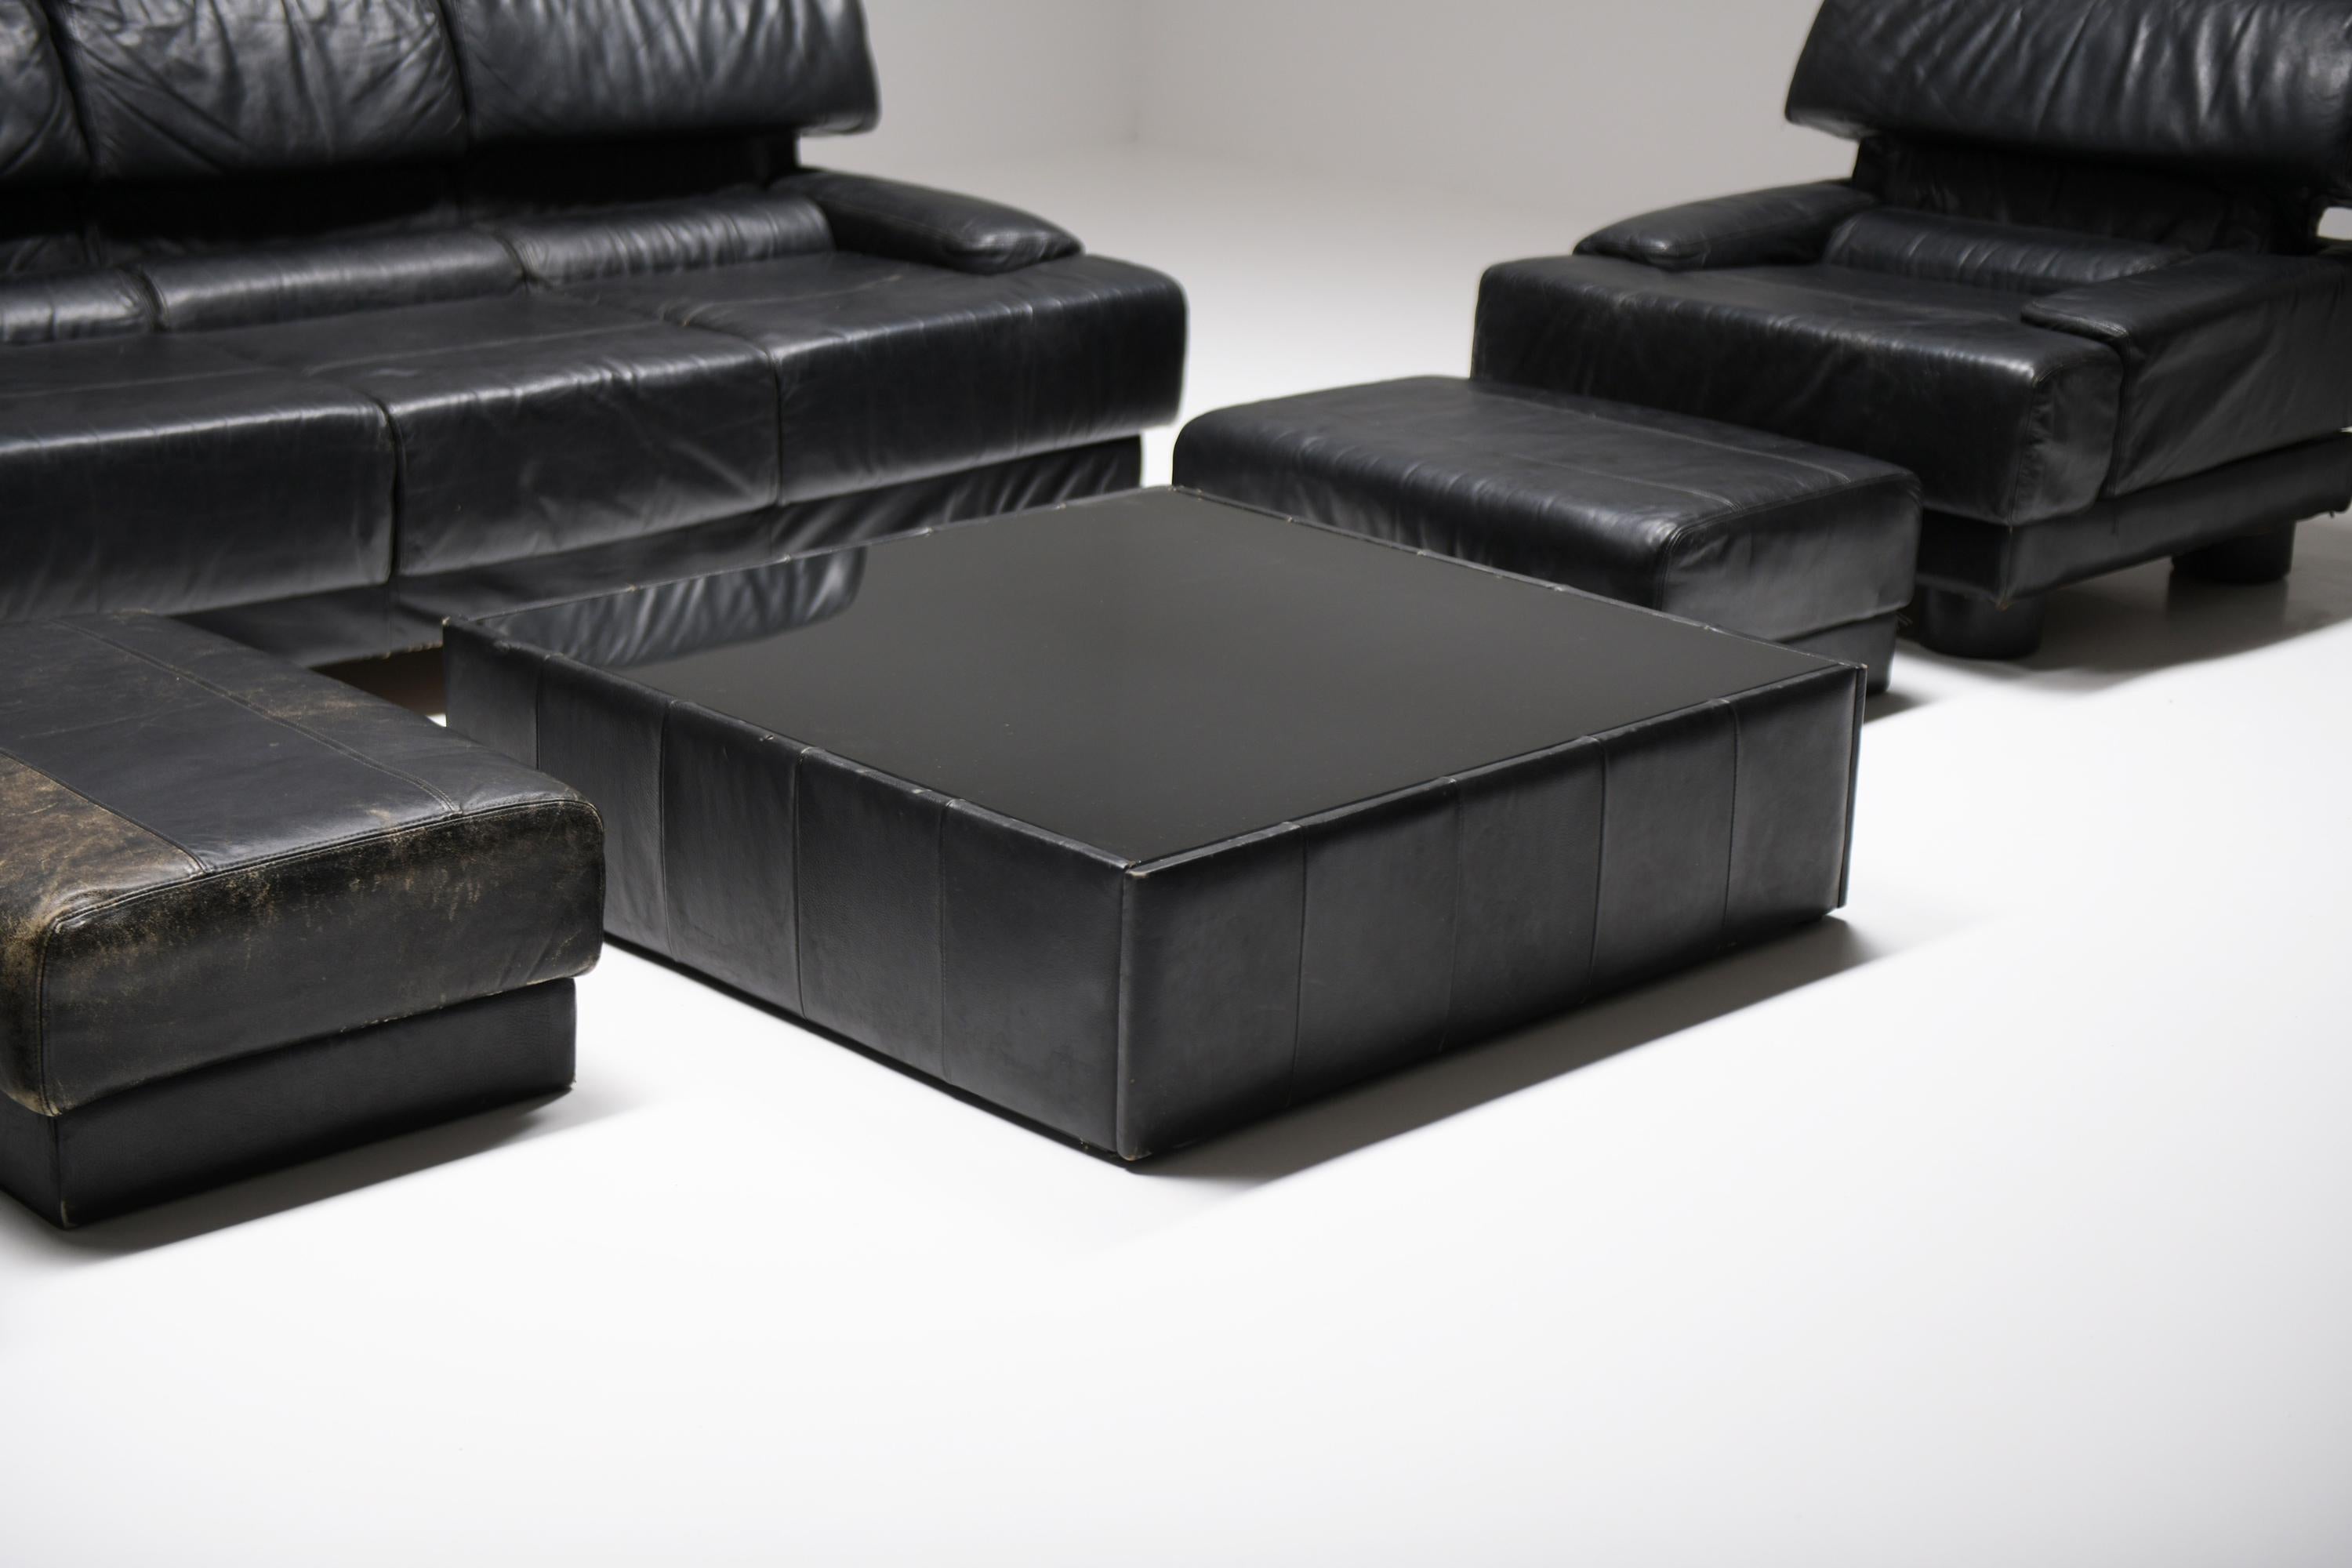 Stunning Percival Lafer sofa set in original black leather - Lafer S.A. - Brazil For Sale 2